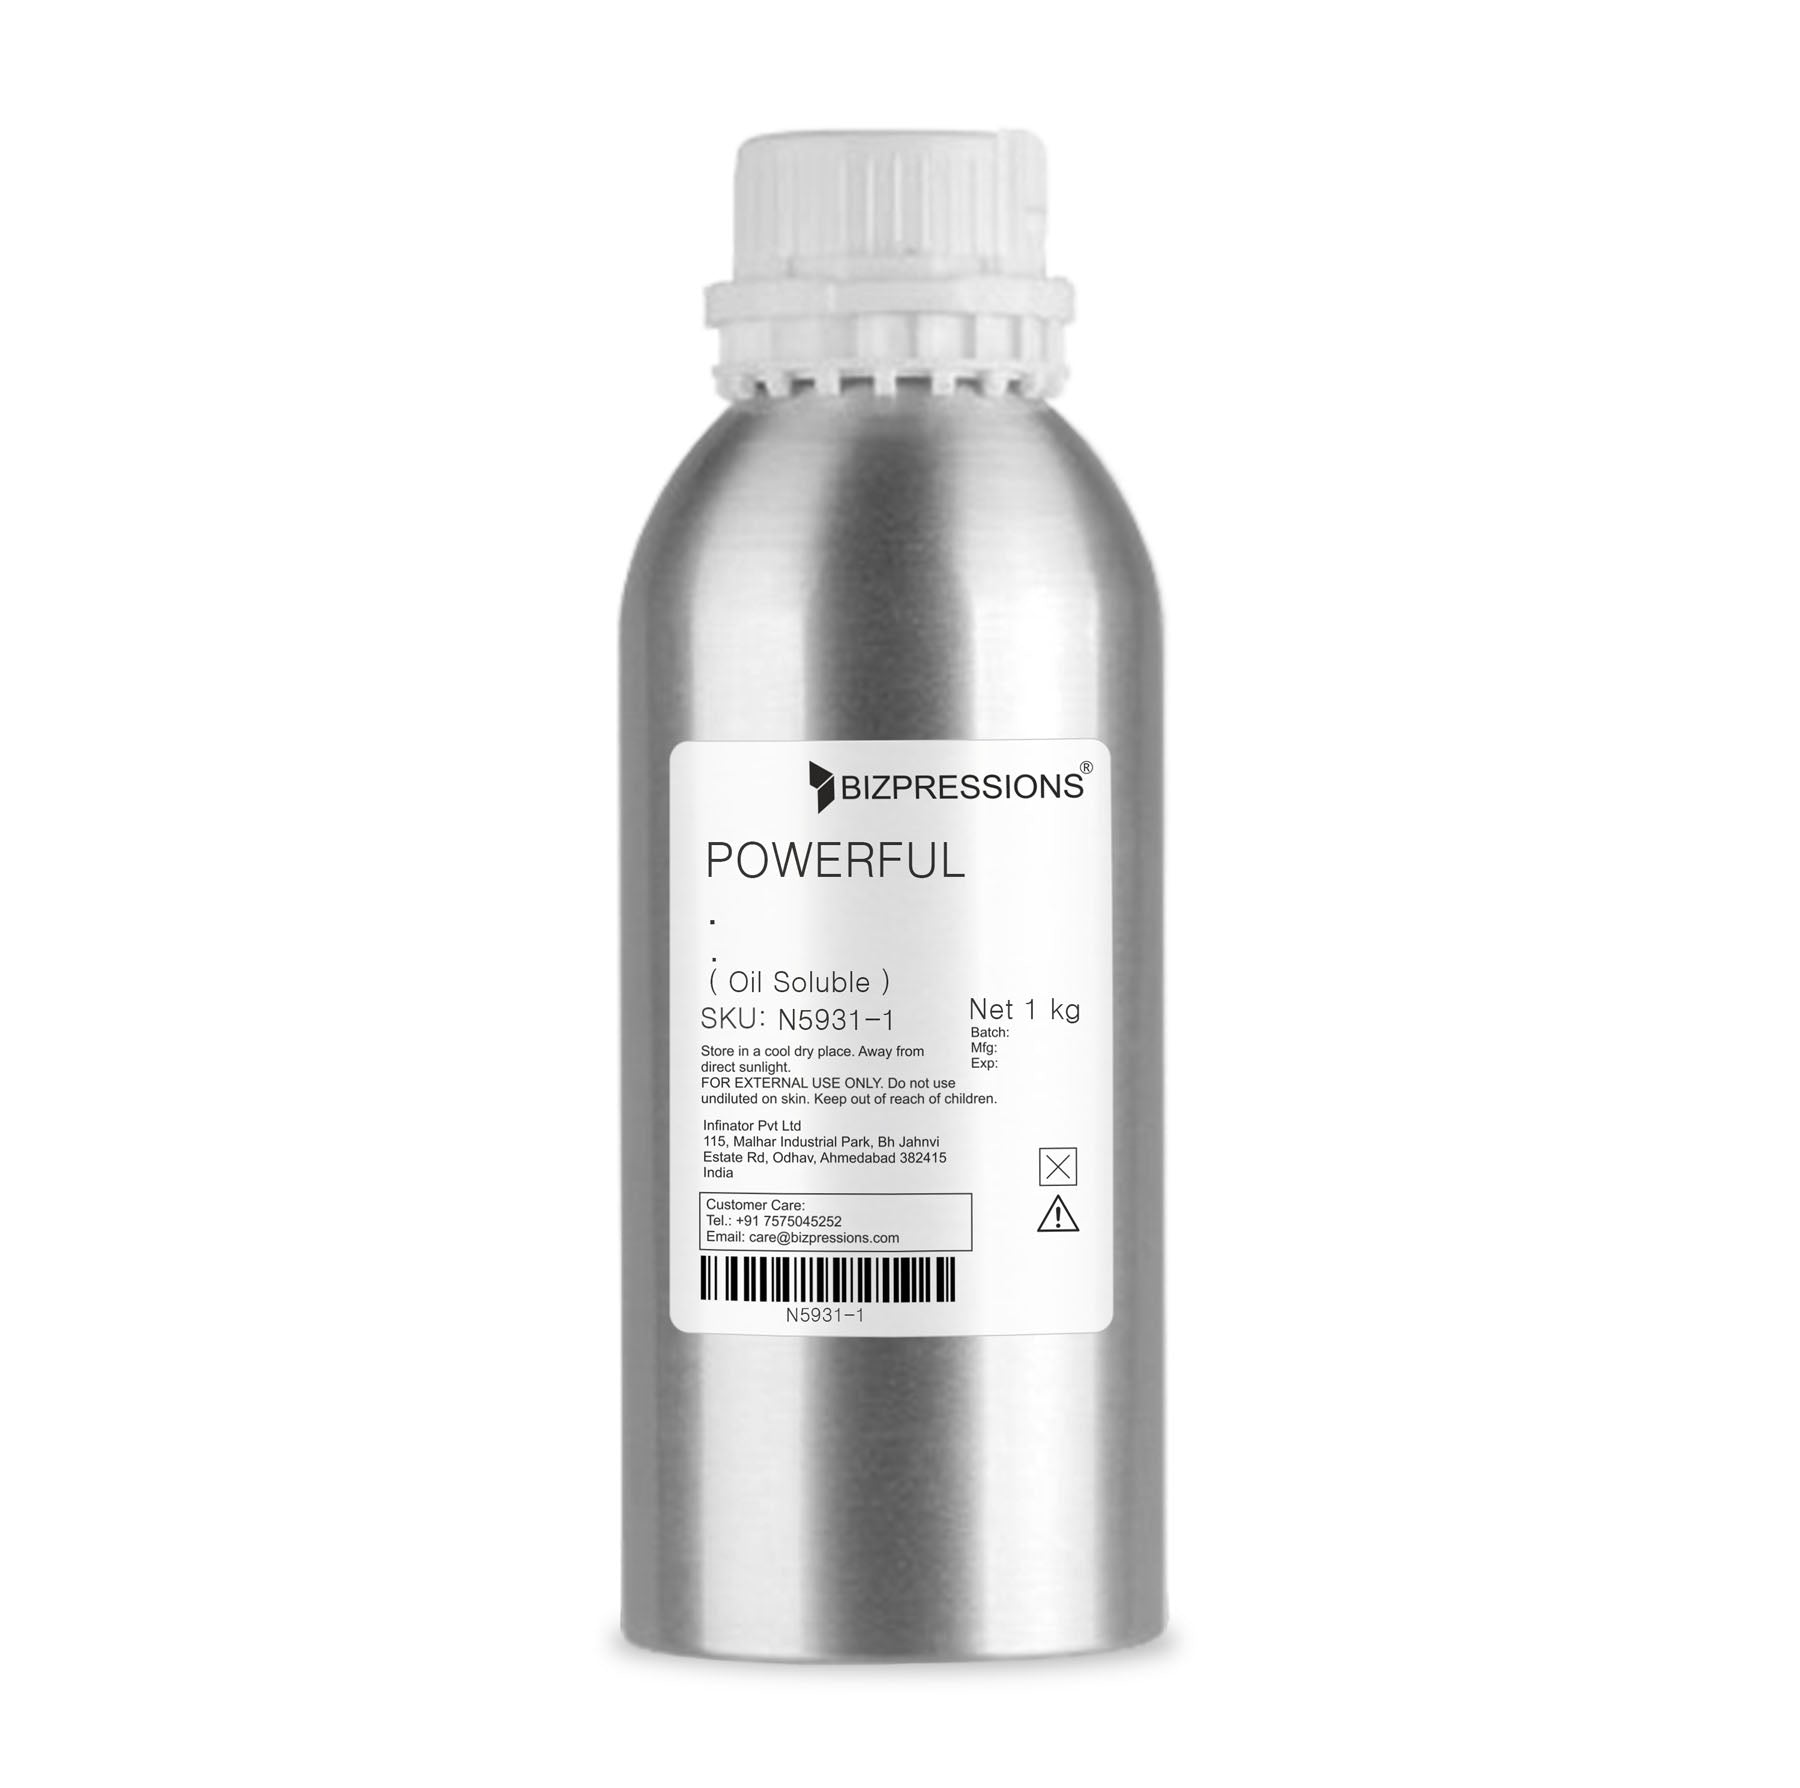 POWERFUL - Fragrance ( Oil Soluble ) - 1 kg